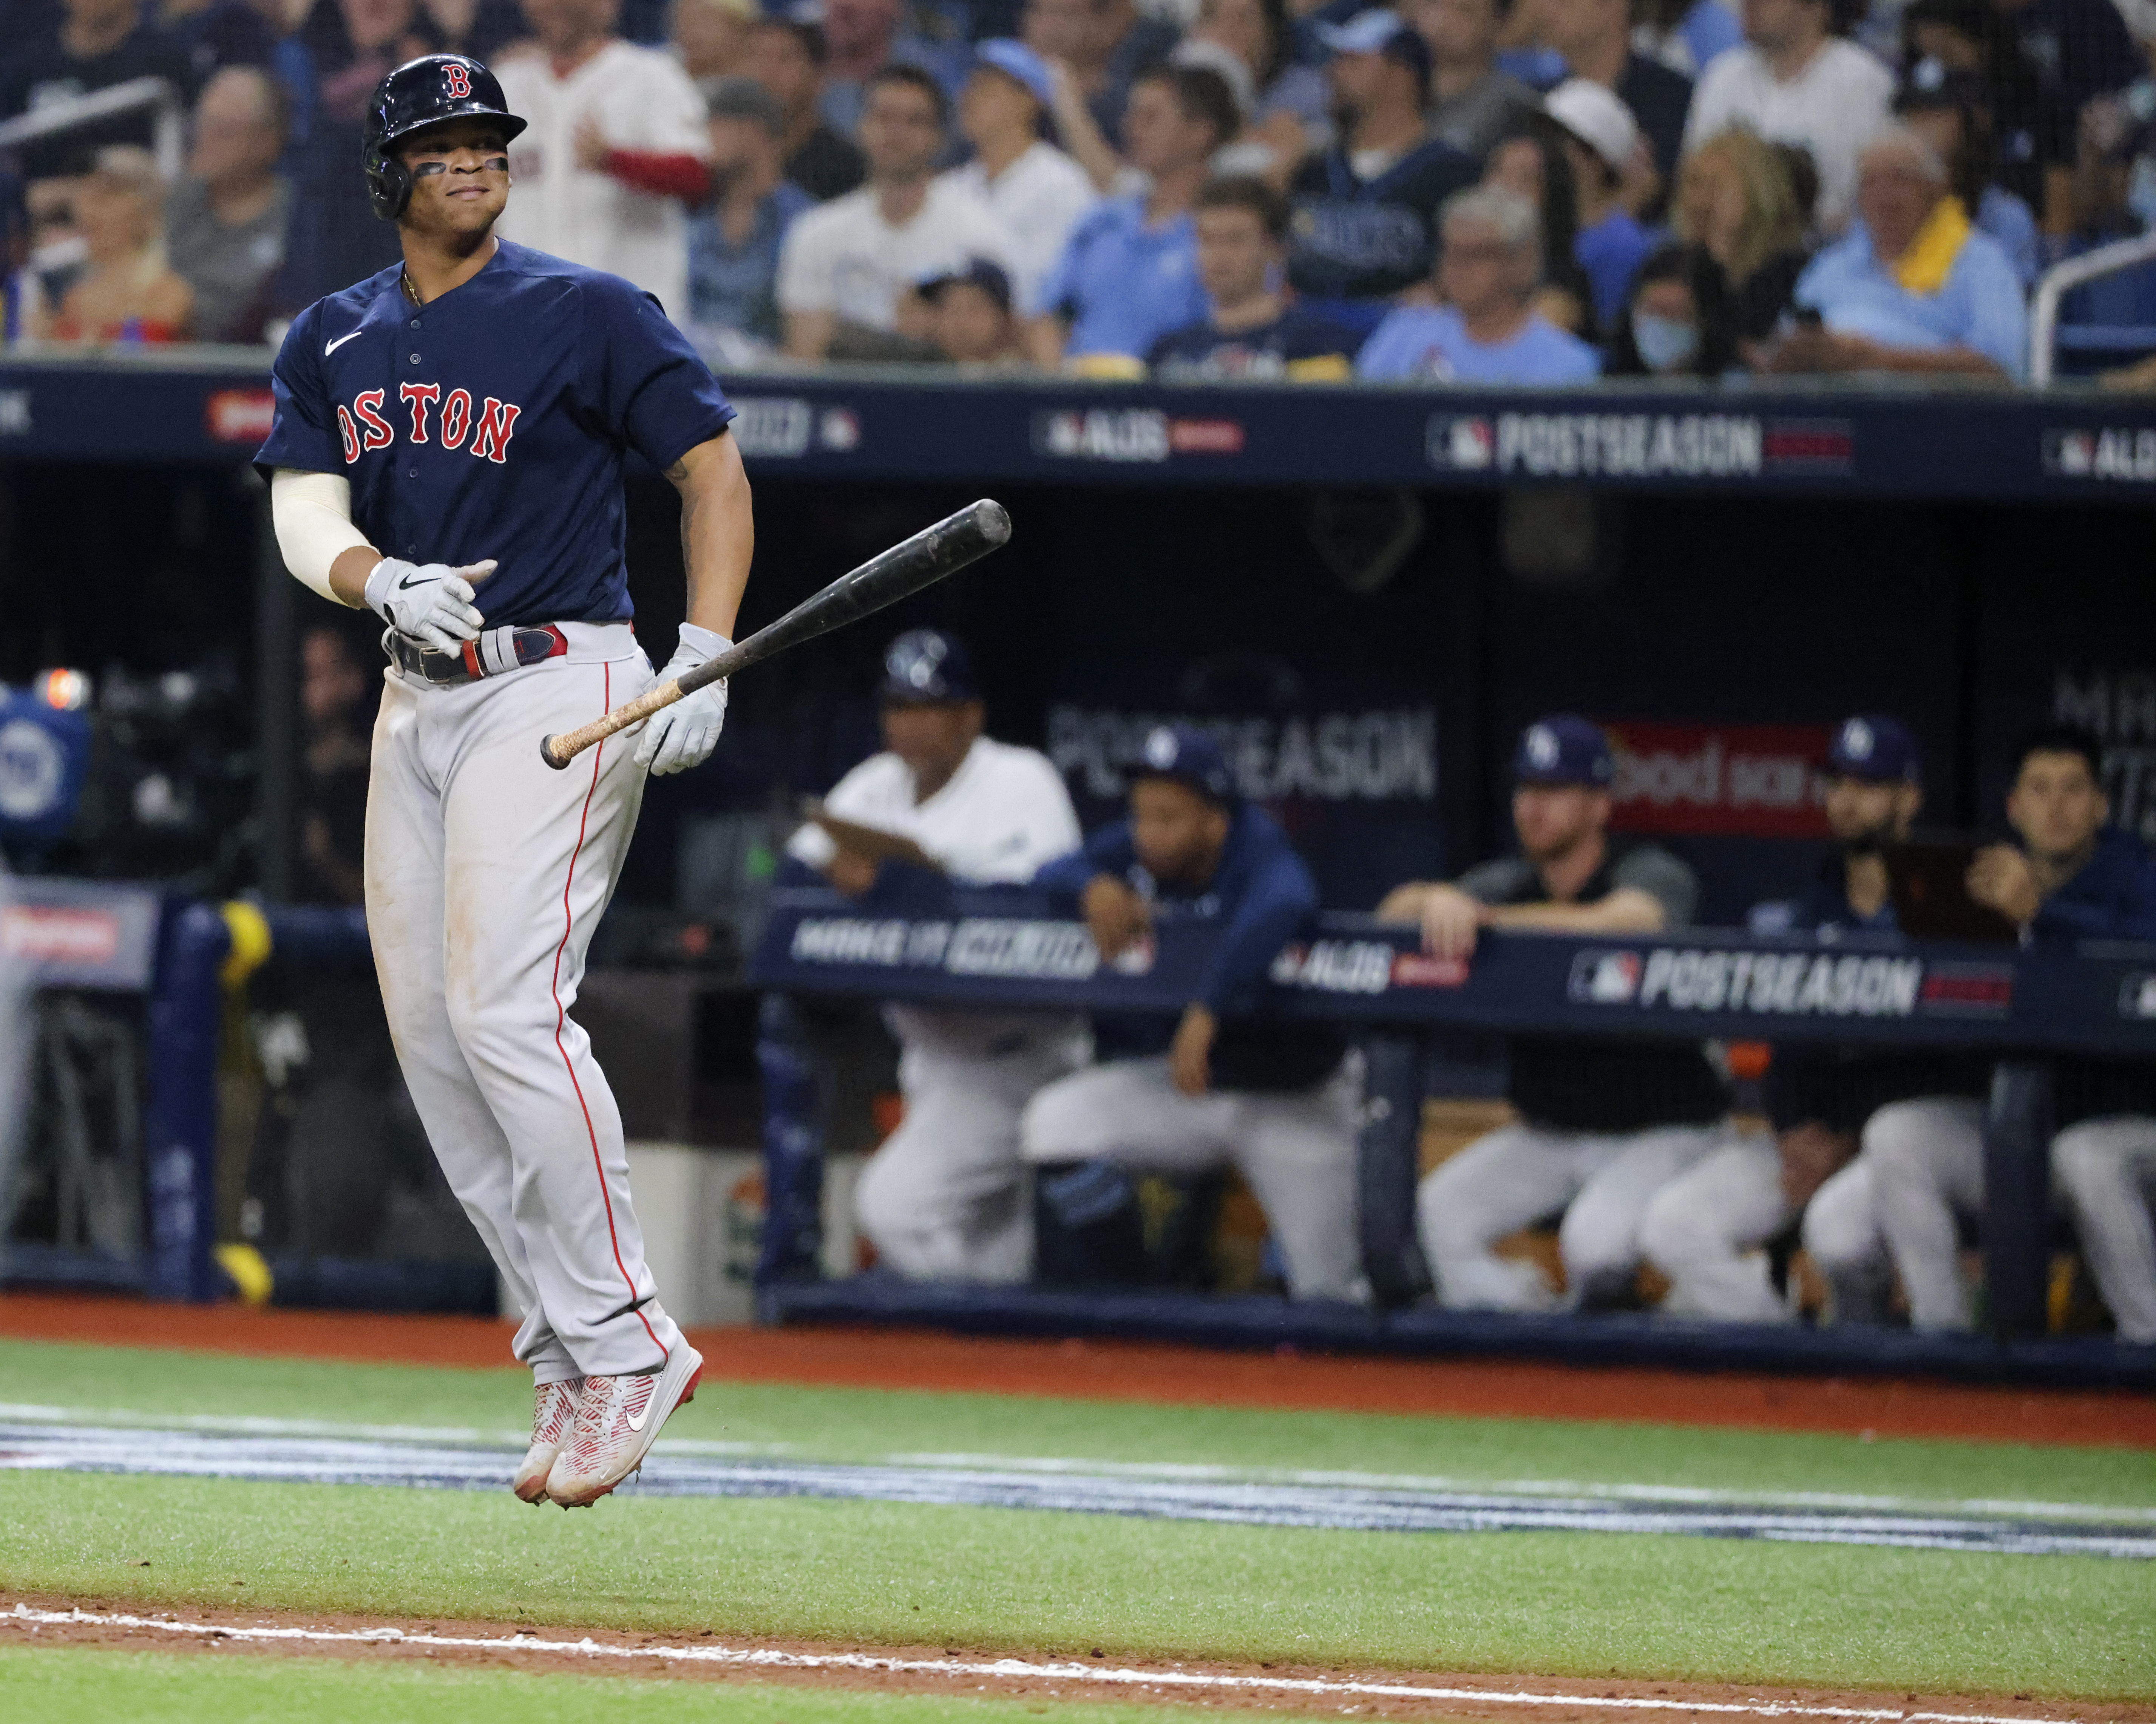 Red Sox' Rafael Devers battling through forearm discomfort against Rays -  The Boston Globe